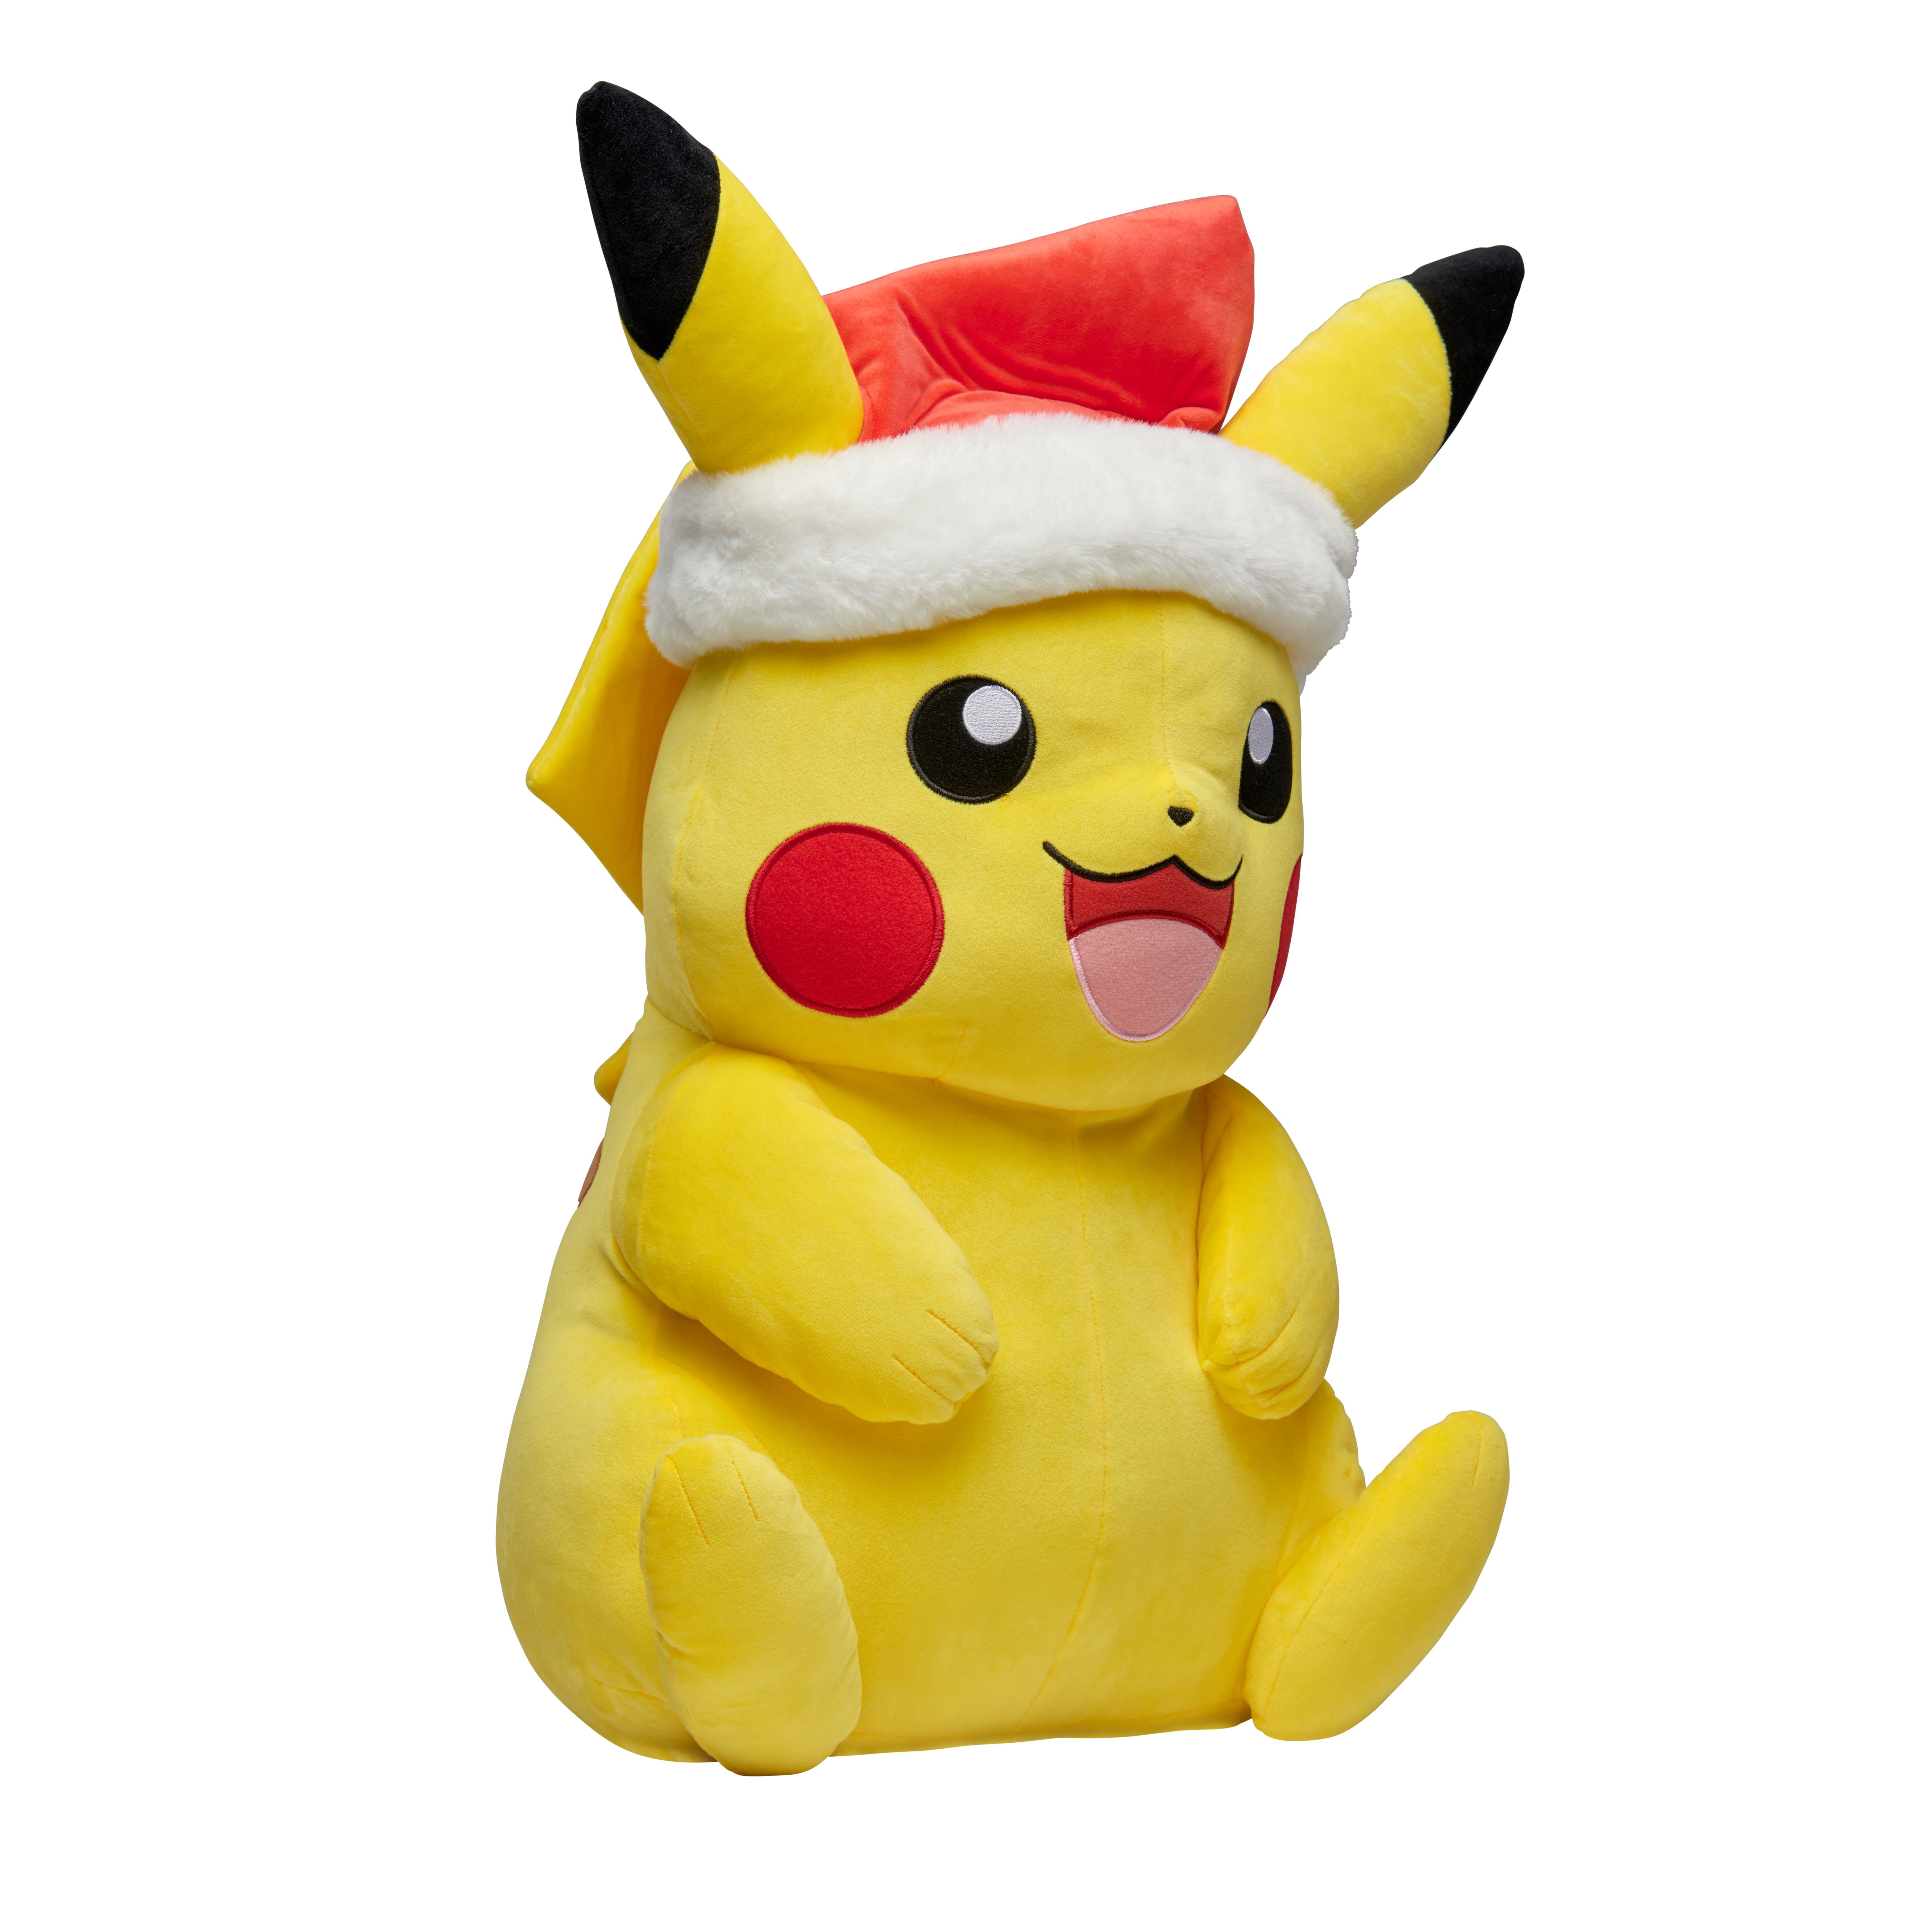 Pokemon 24 Plush - Pikachu : Target